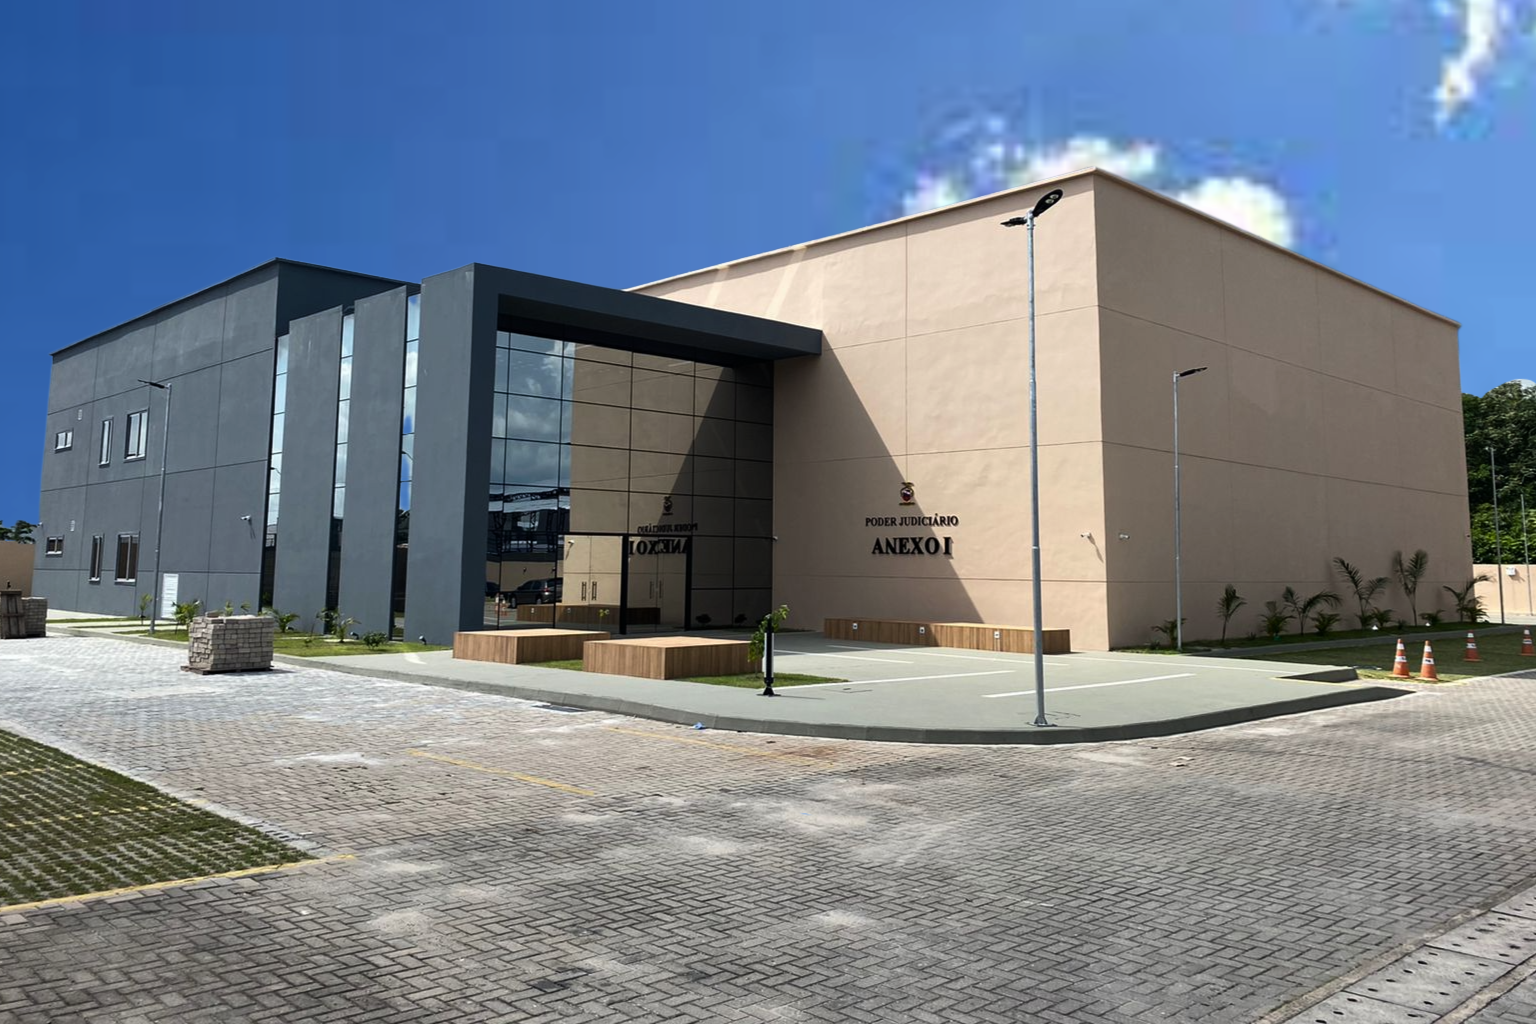 Tribunal de Justiça do Pará – Anexo II